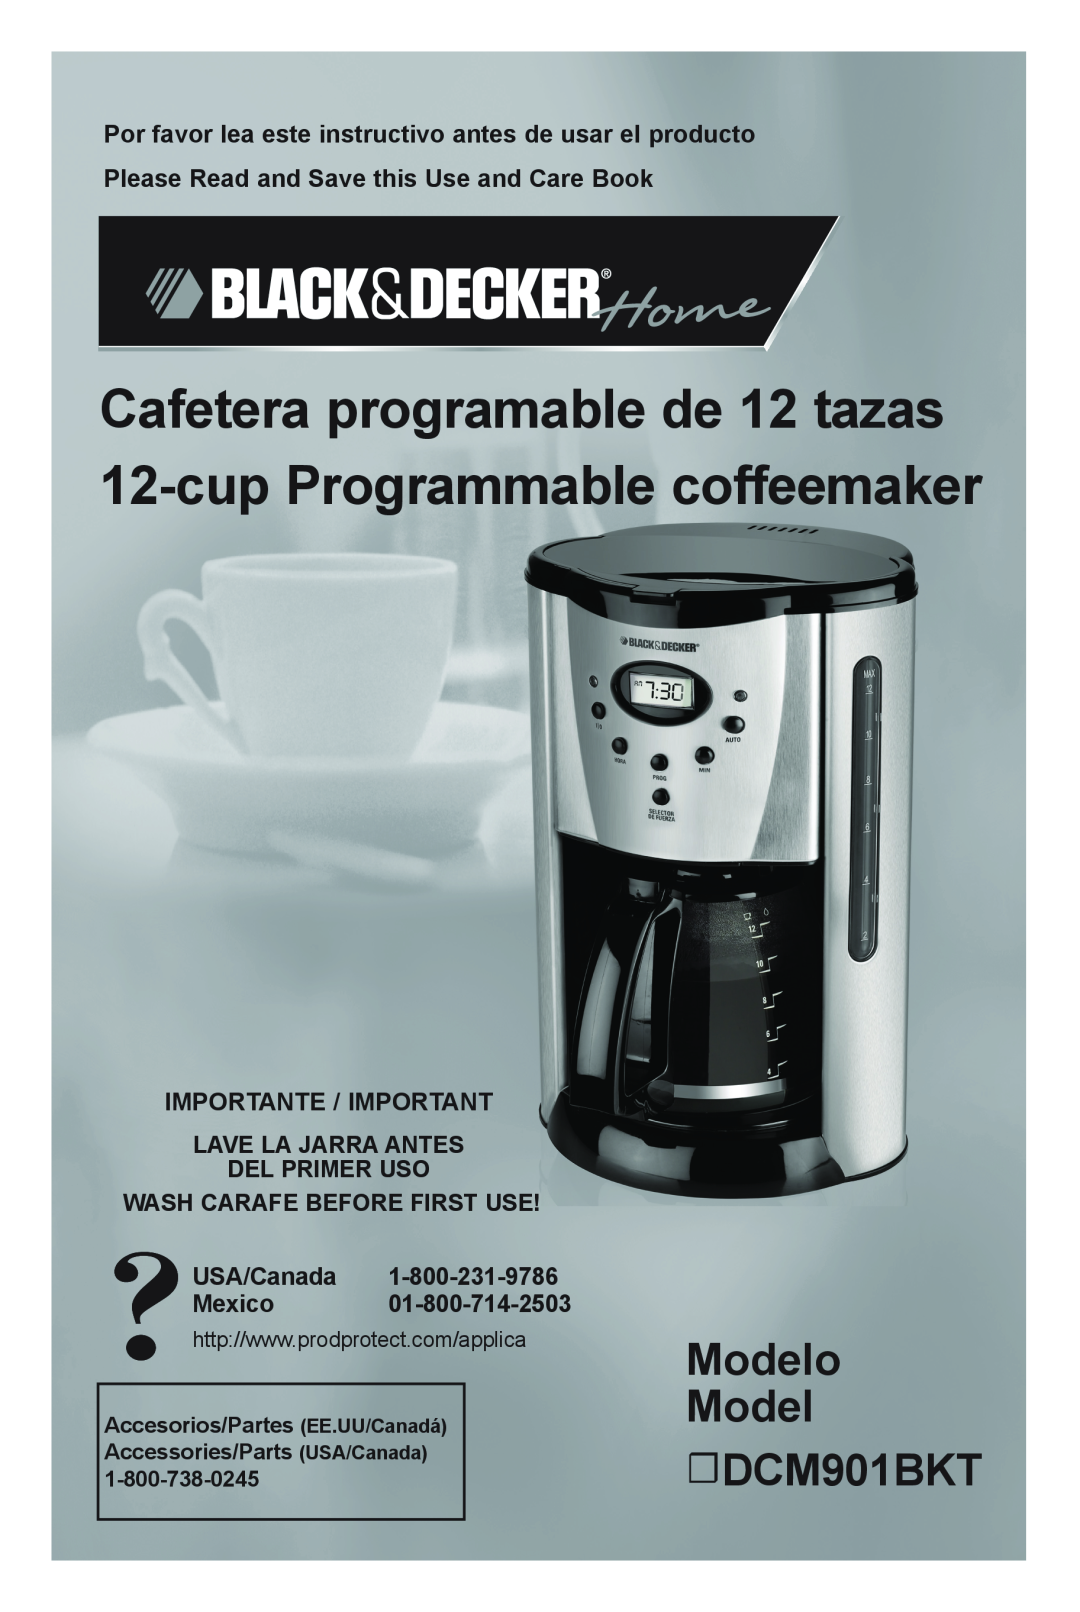 Black & Decker manual Modelo Model DCM901BKT, Cafetera programable de 12 tazas 12-cup Programmable coffeemaker 